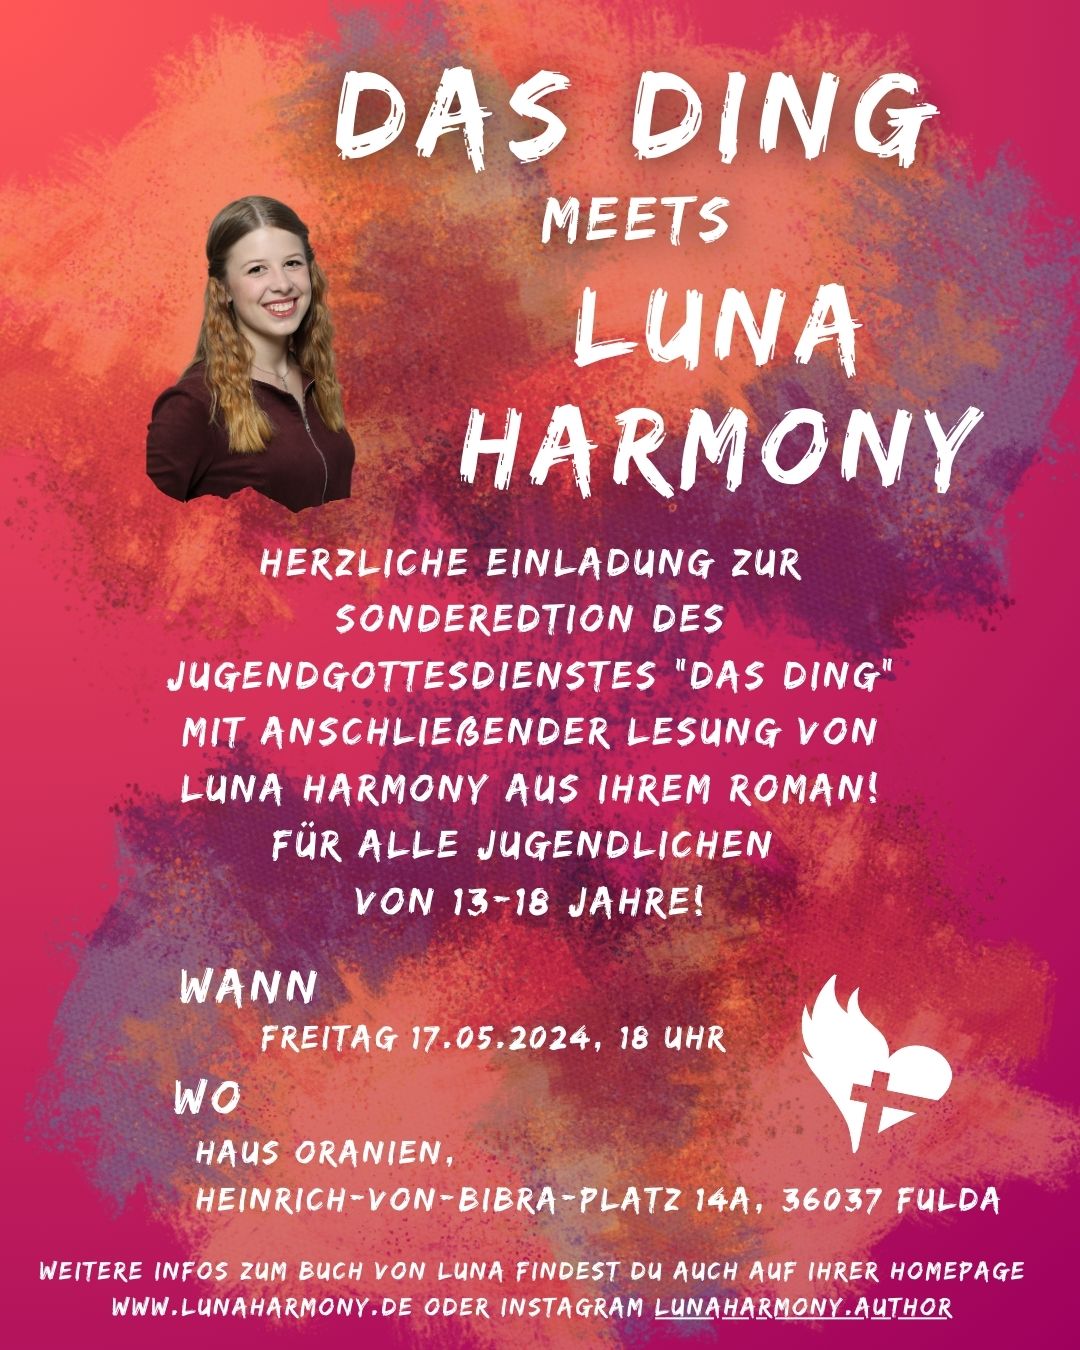 Luna Harmony